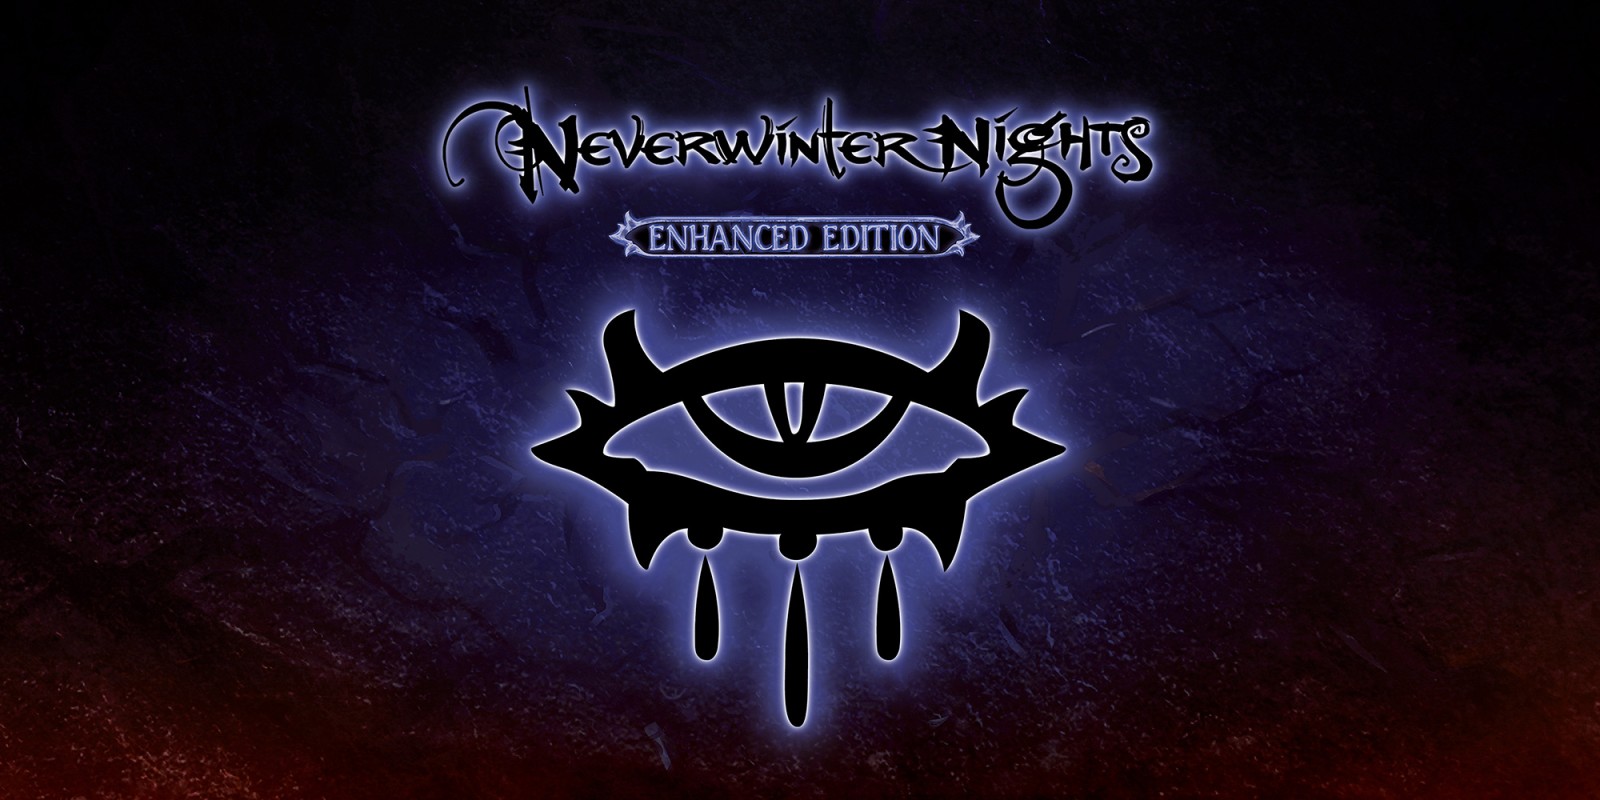 neverwinter nights enhanced edition unlock console commands